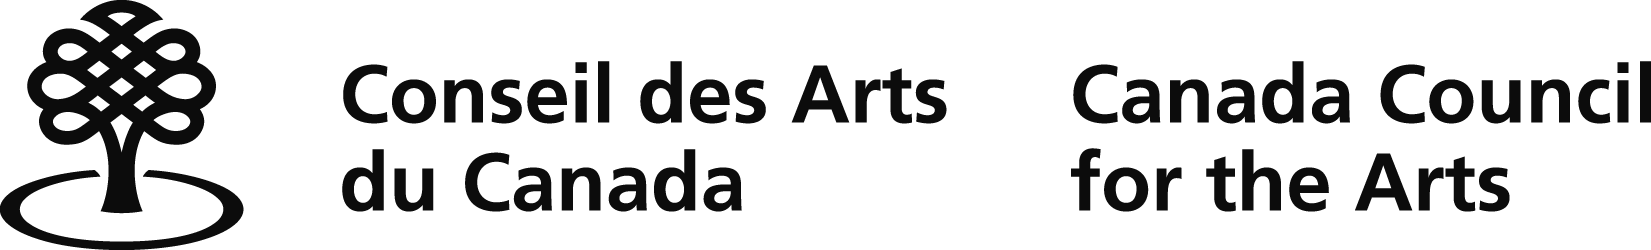 11-logo-conseil-des-arts-du-canada